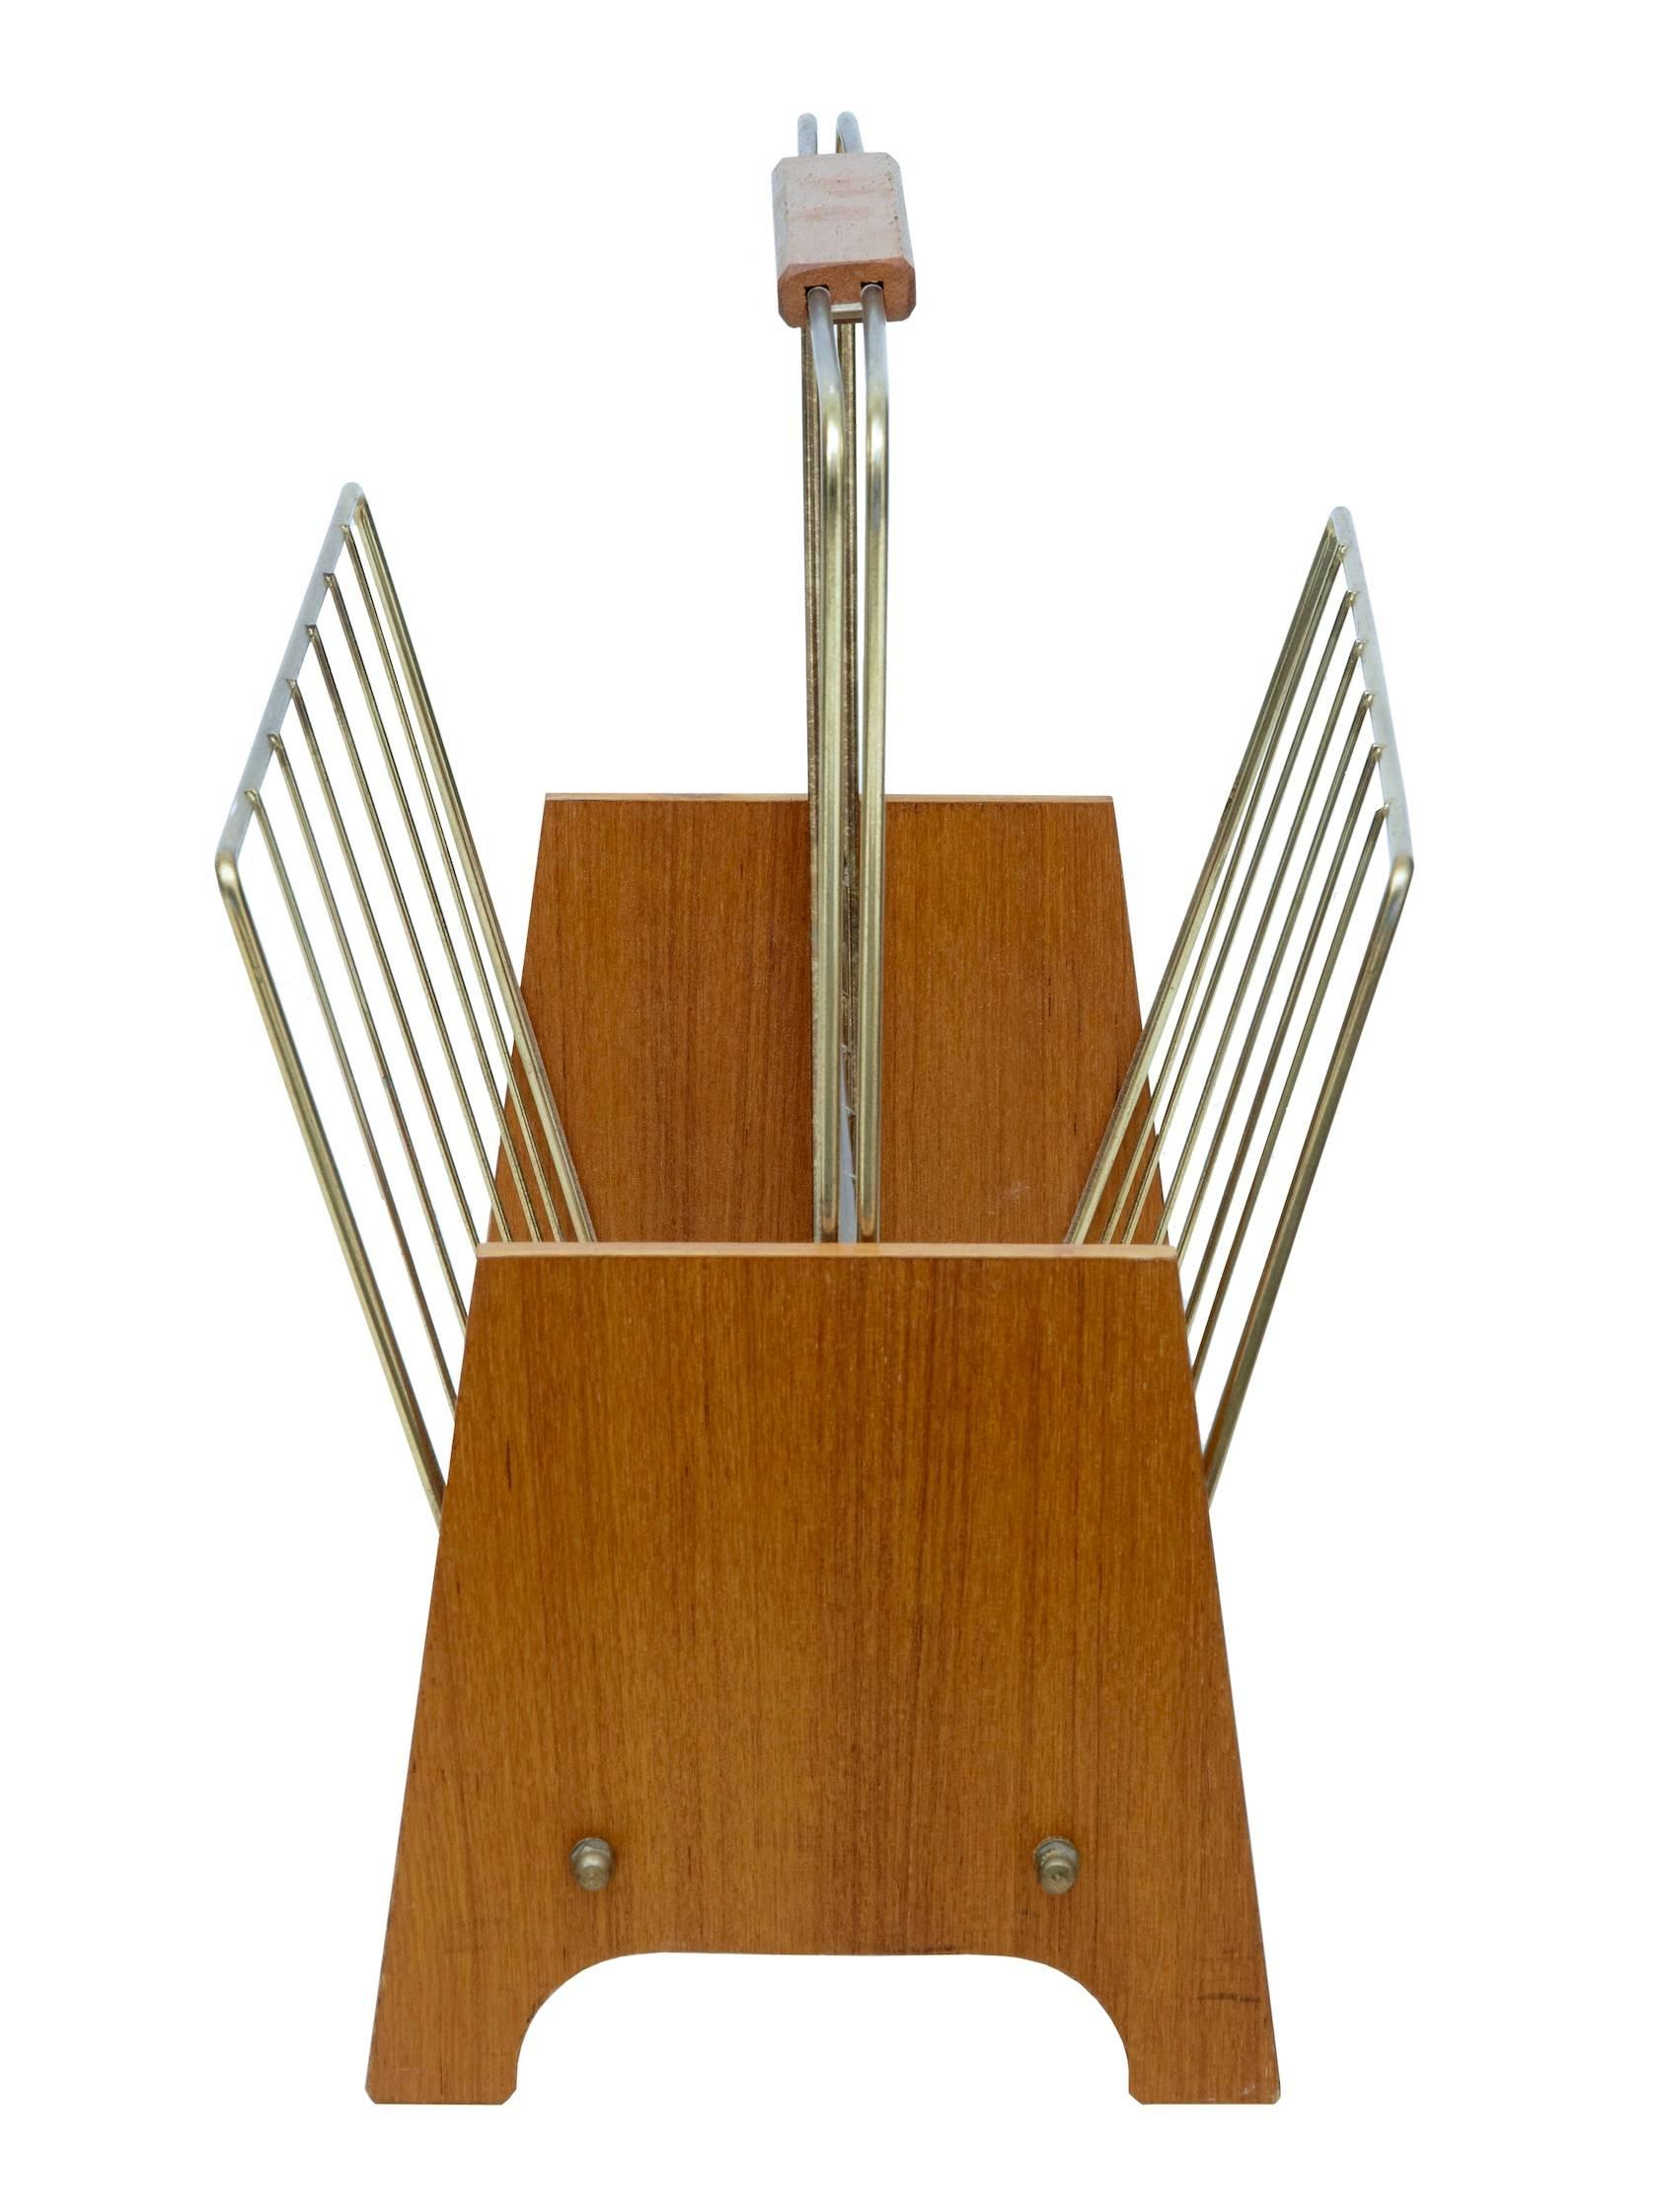 Scandinavian Modern 1960s magazine rack. Wooden teak handle with brass metalwork, standing between a pair of teak shaped ends.
 
Measures: Height 15 1/2